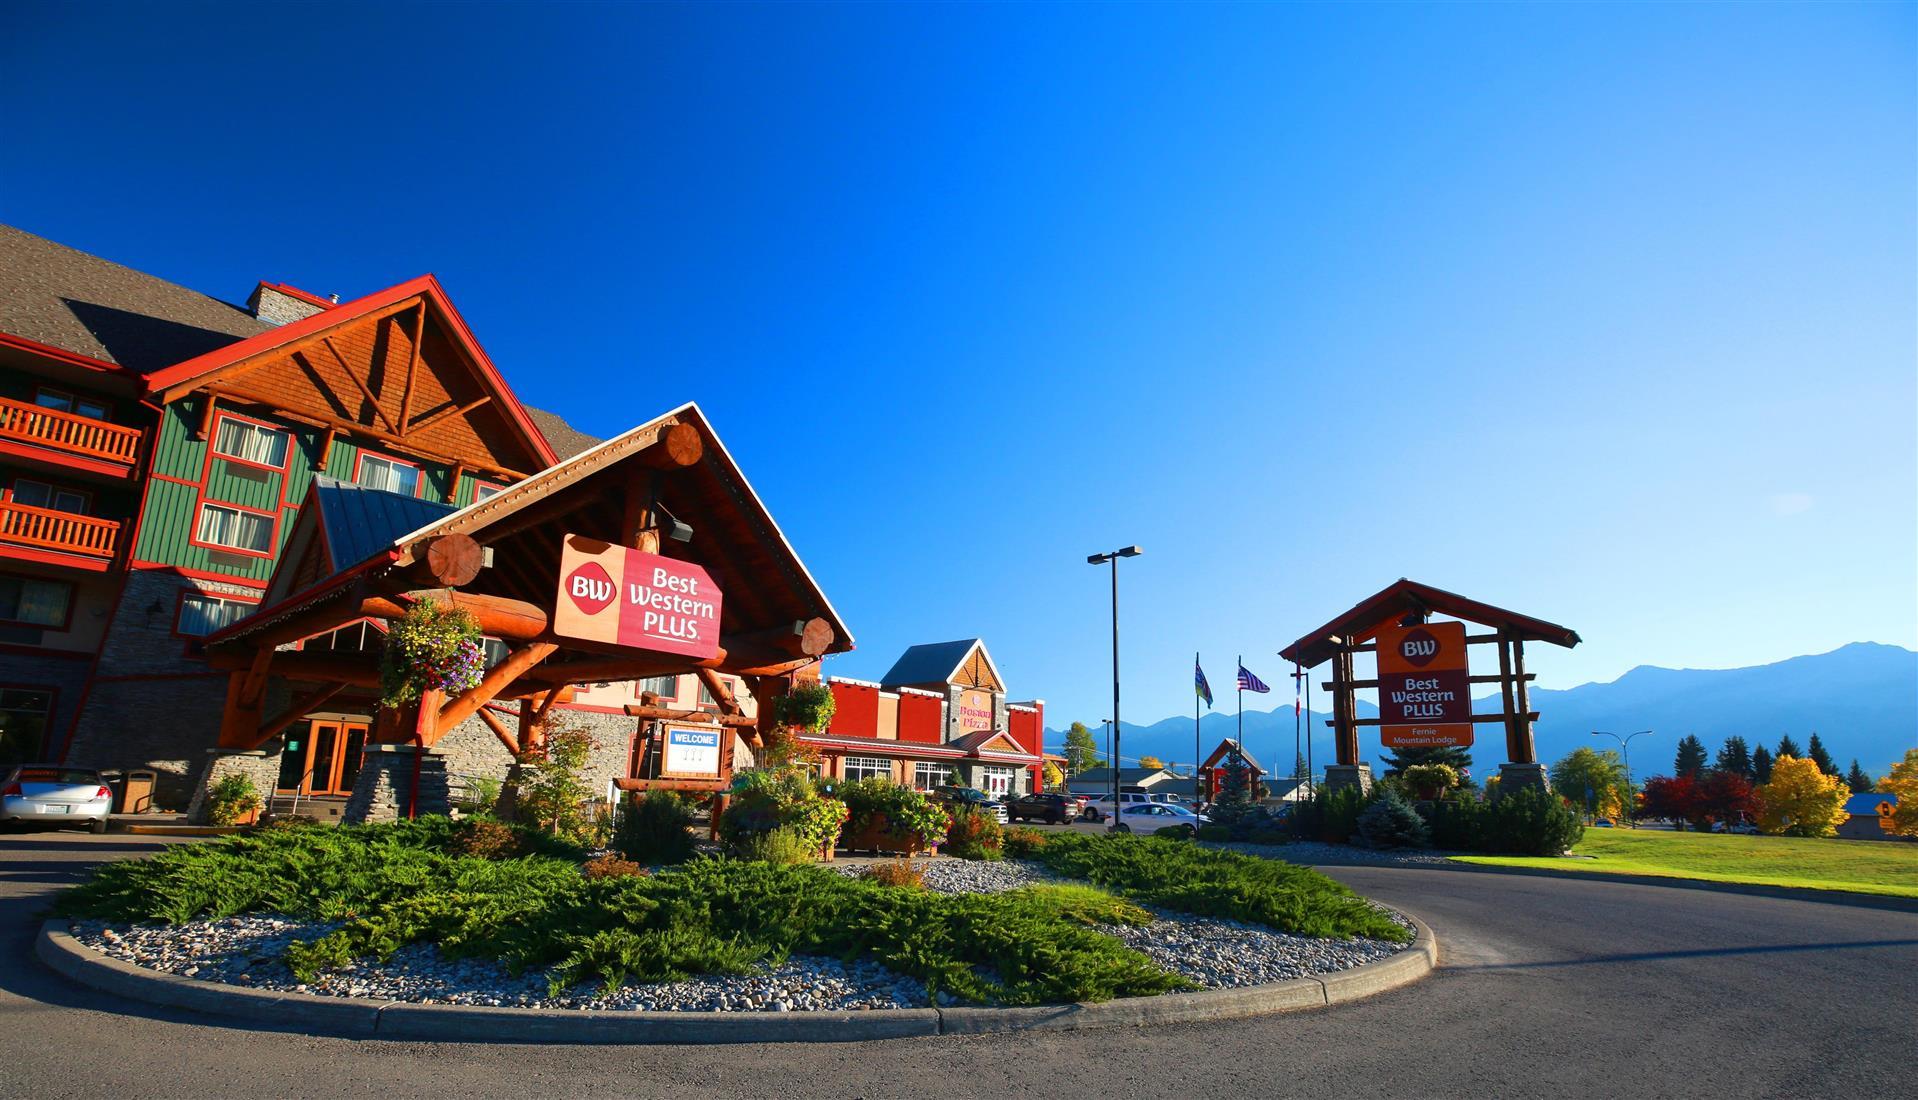 Best Western Plus Fernie Mountain Lodge in Fernie, BC